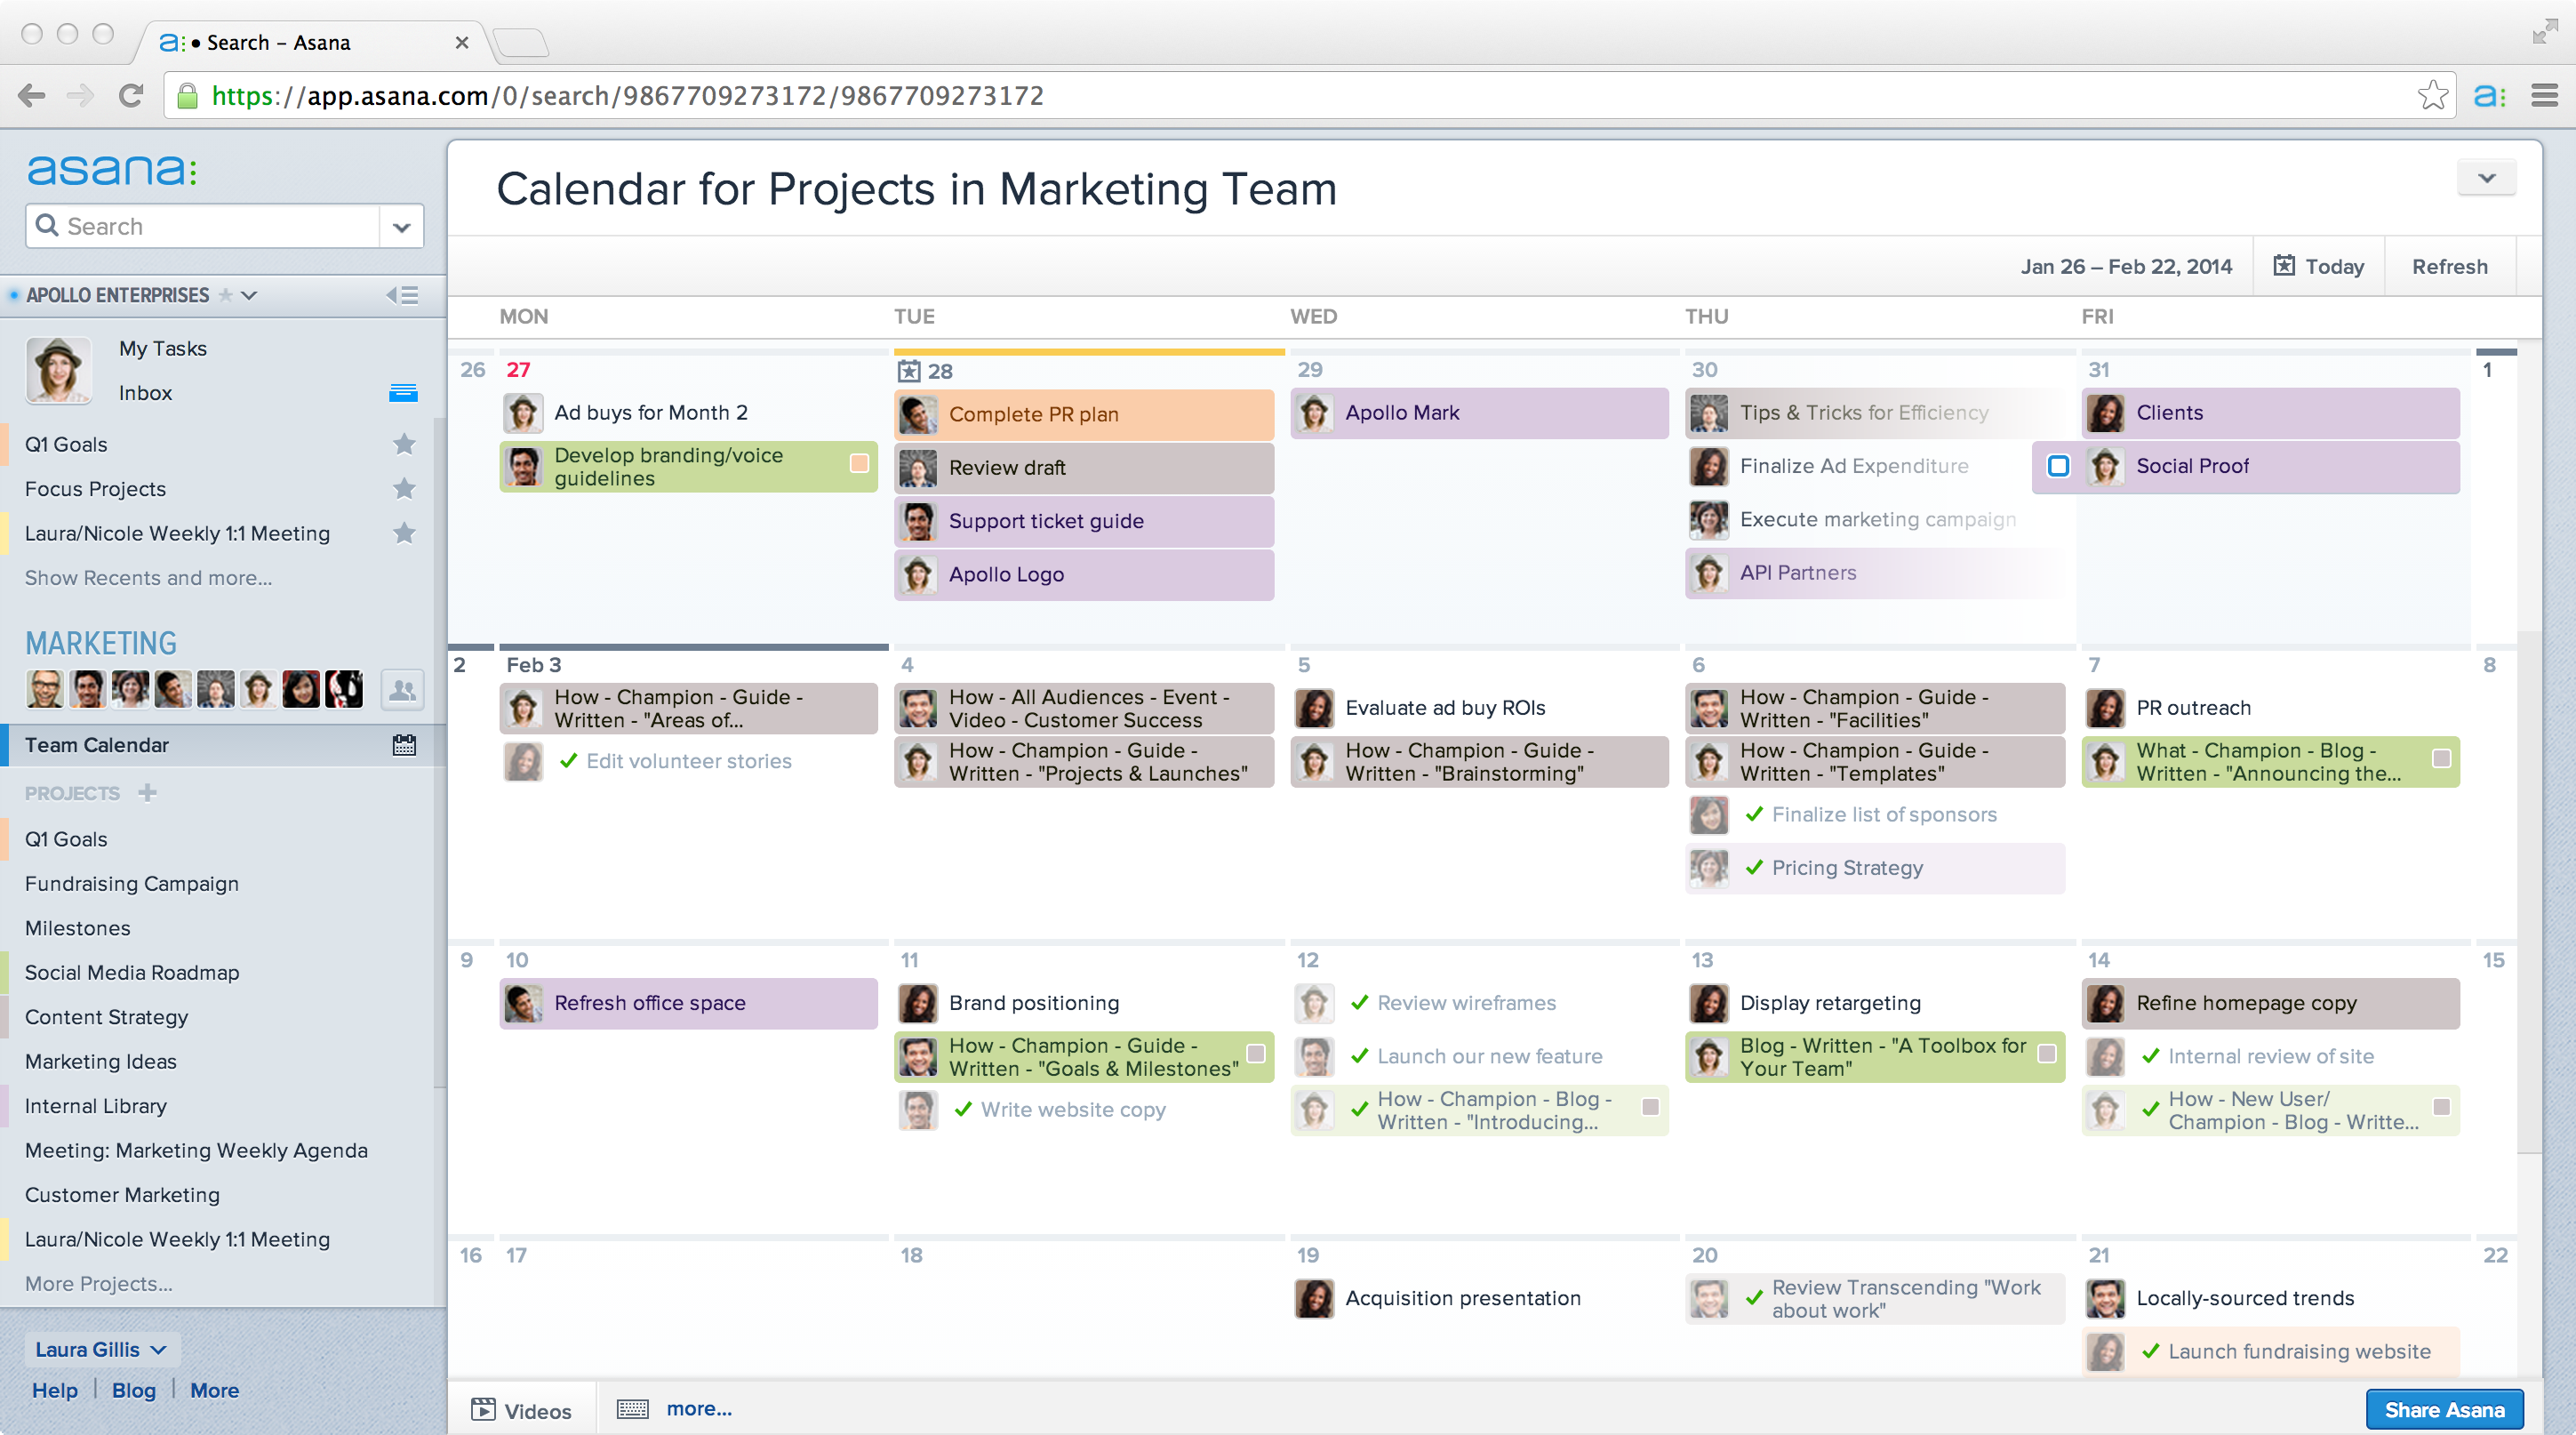 an Asana calendar for projects in marketing team